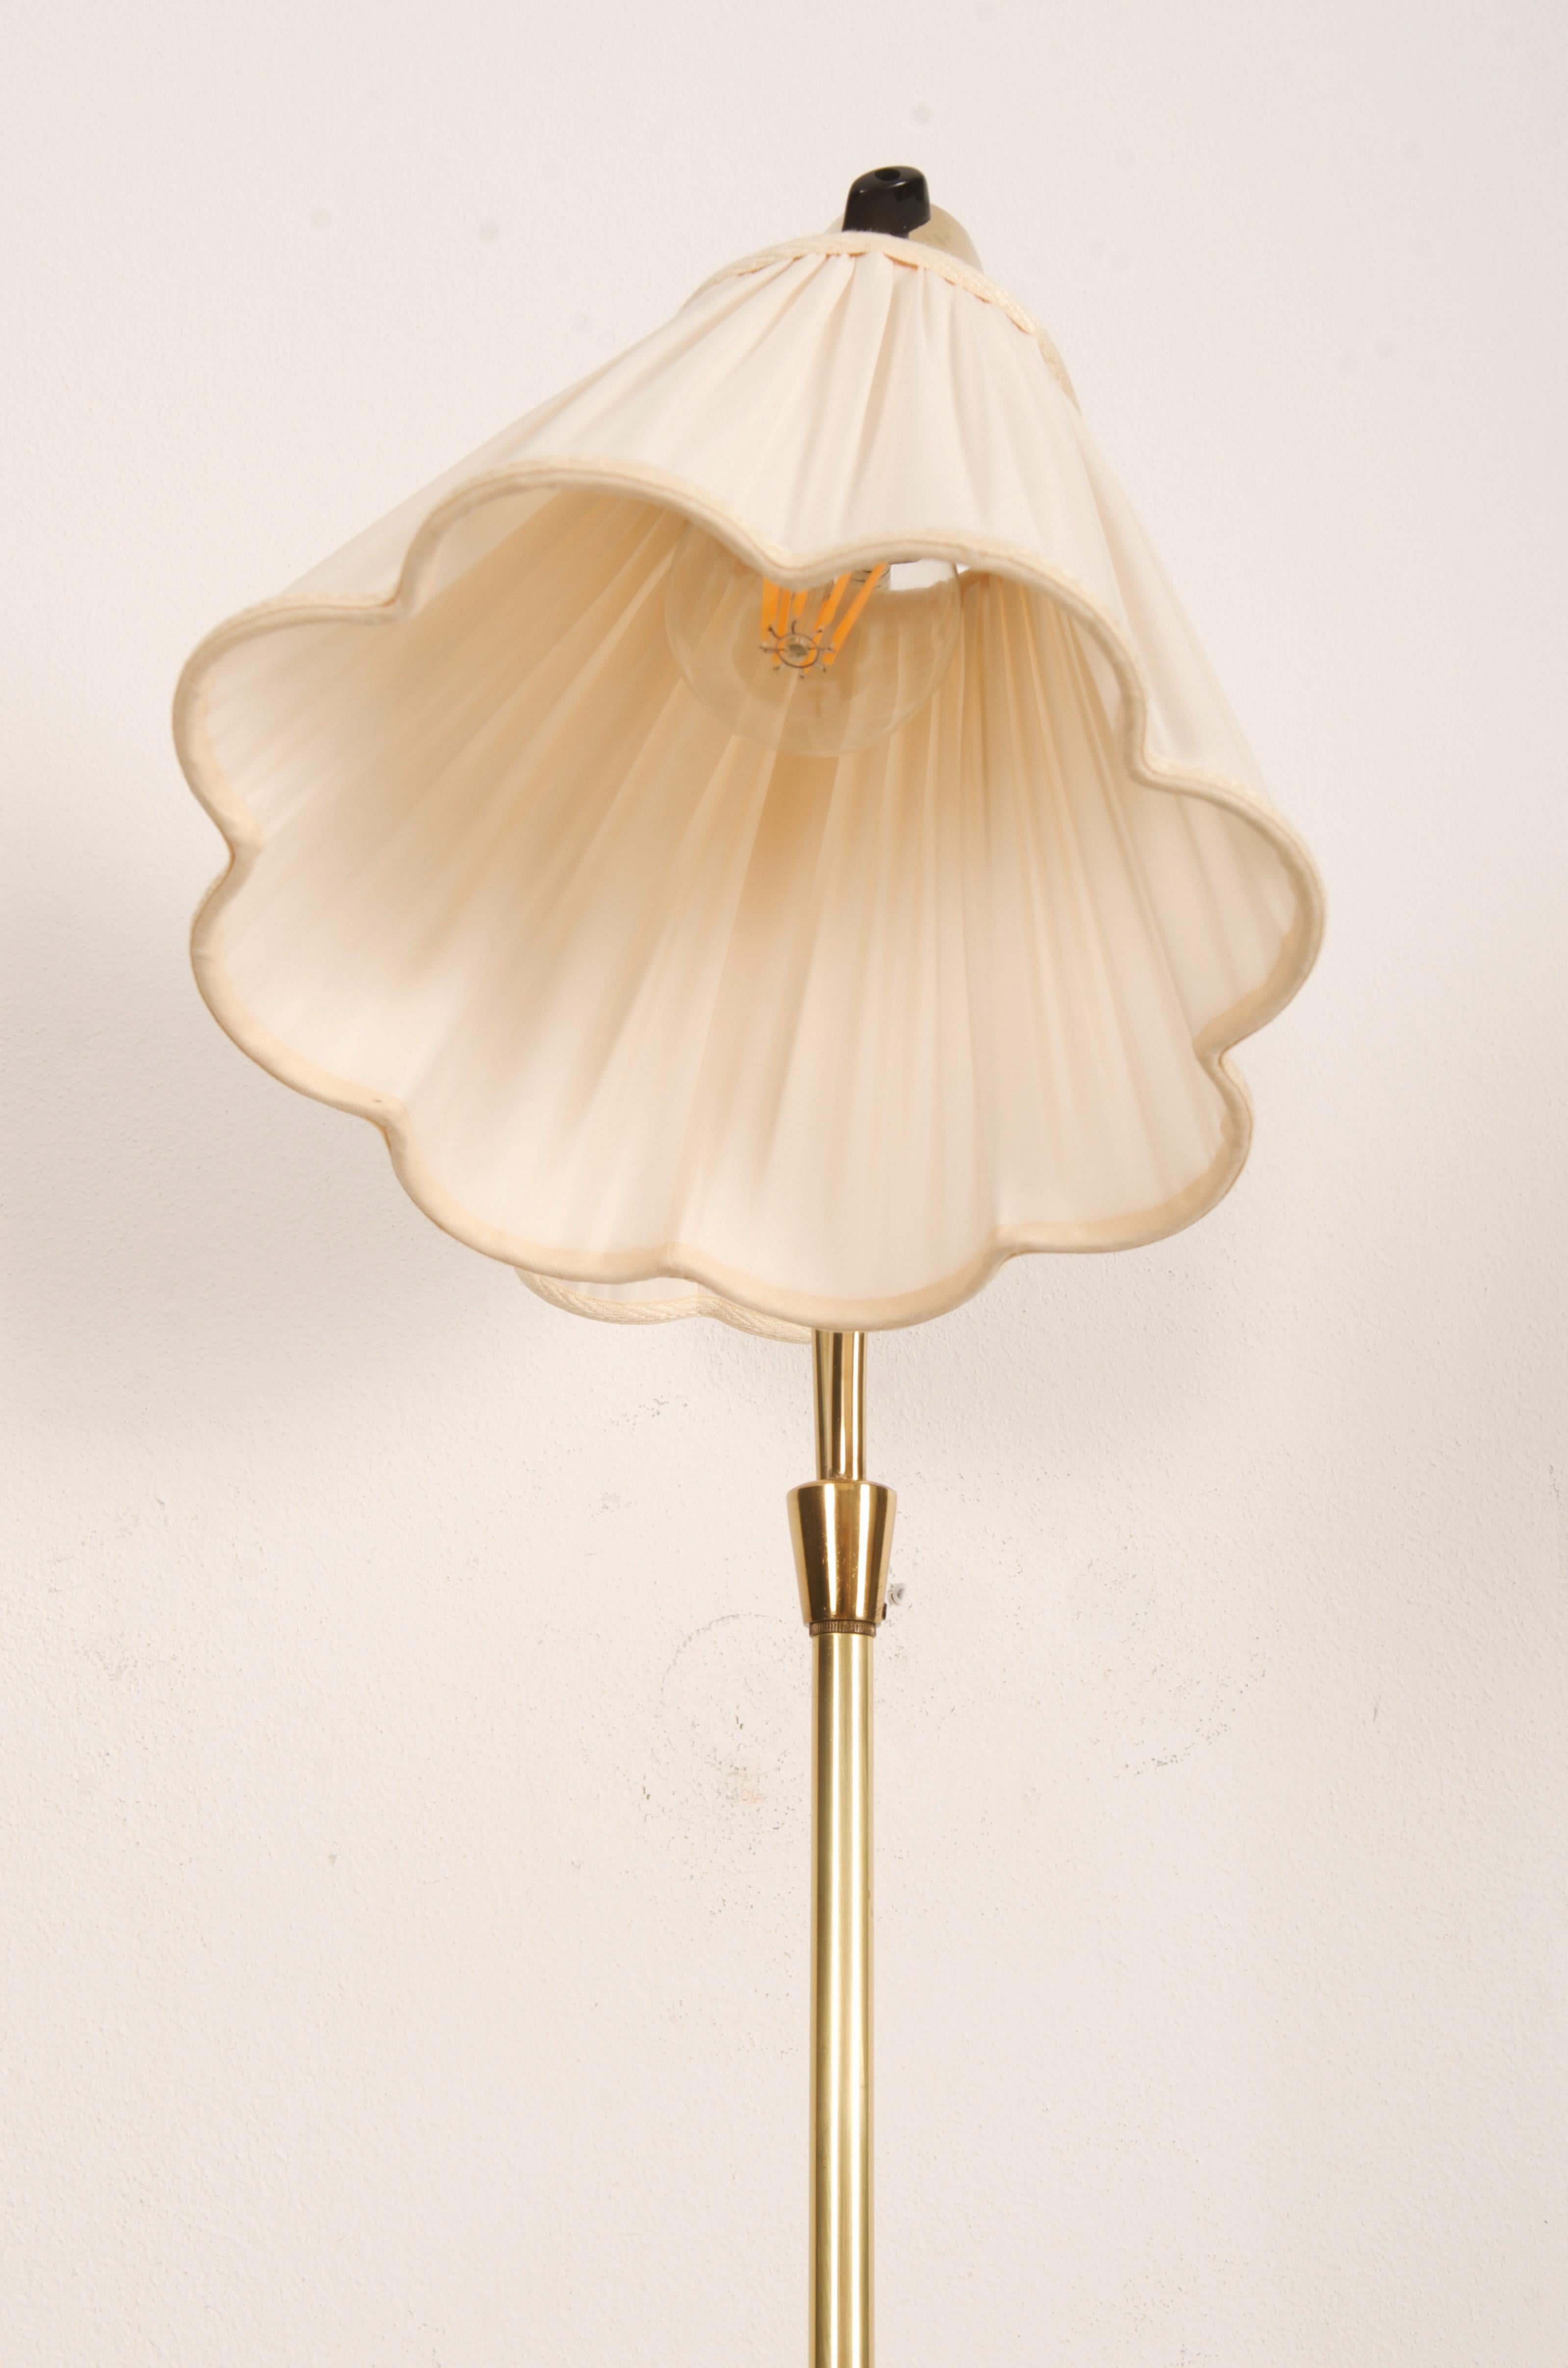 Teak Rare Floor Lamp by Hans Bergström for Ateljé Lyktan from the 1950s